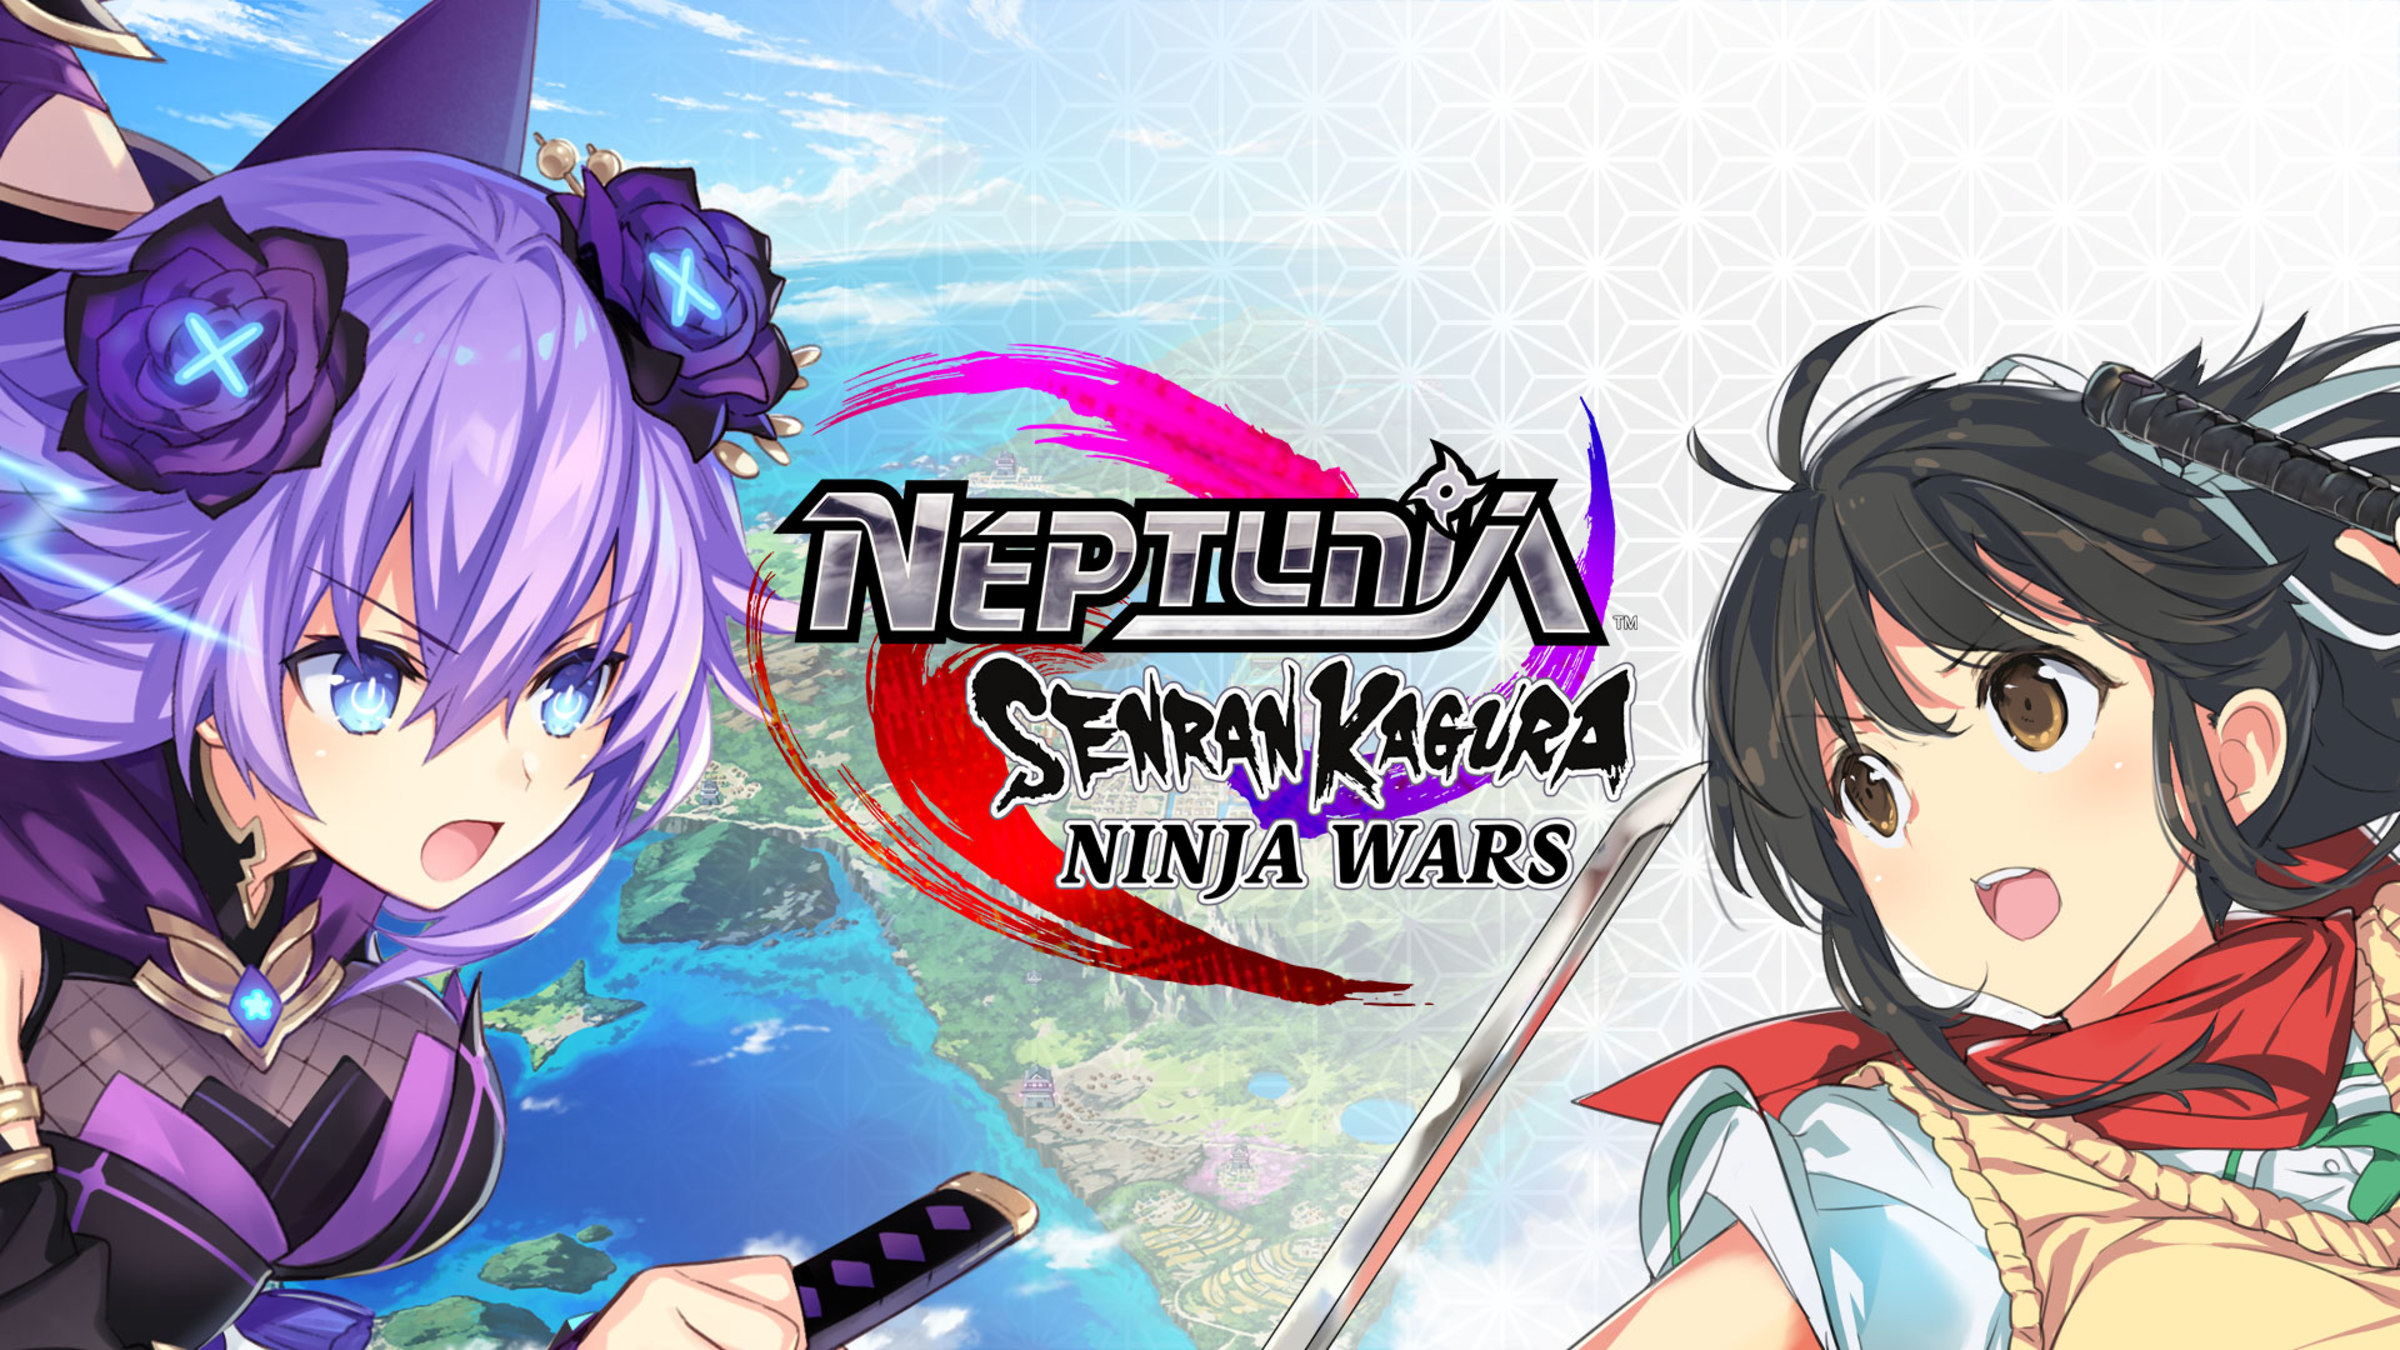 Neptunia x SENRAN KAGURA: Ninja Wars - Nintendo Switch, Nintendo Switch